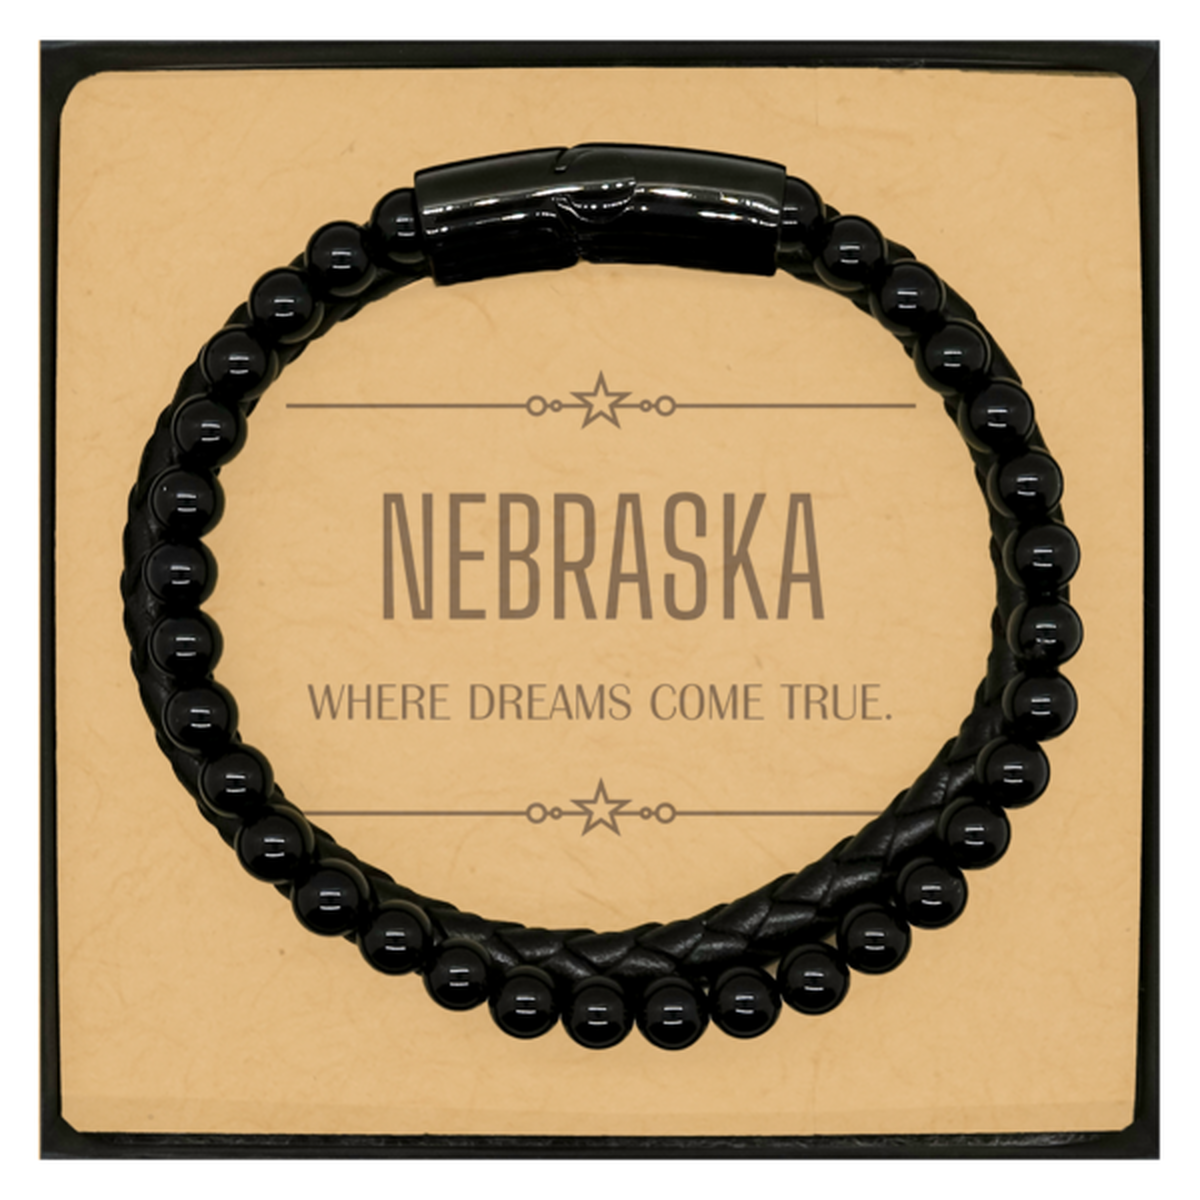 Love Nebraska State Stone Leather Bracelets, Nebraska Where dreams come true, Birthday Christmas Inspirational Gifts For Nebraska Men, Women, Friends